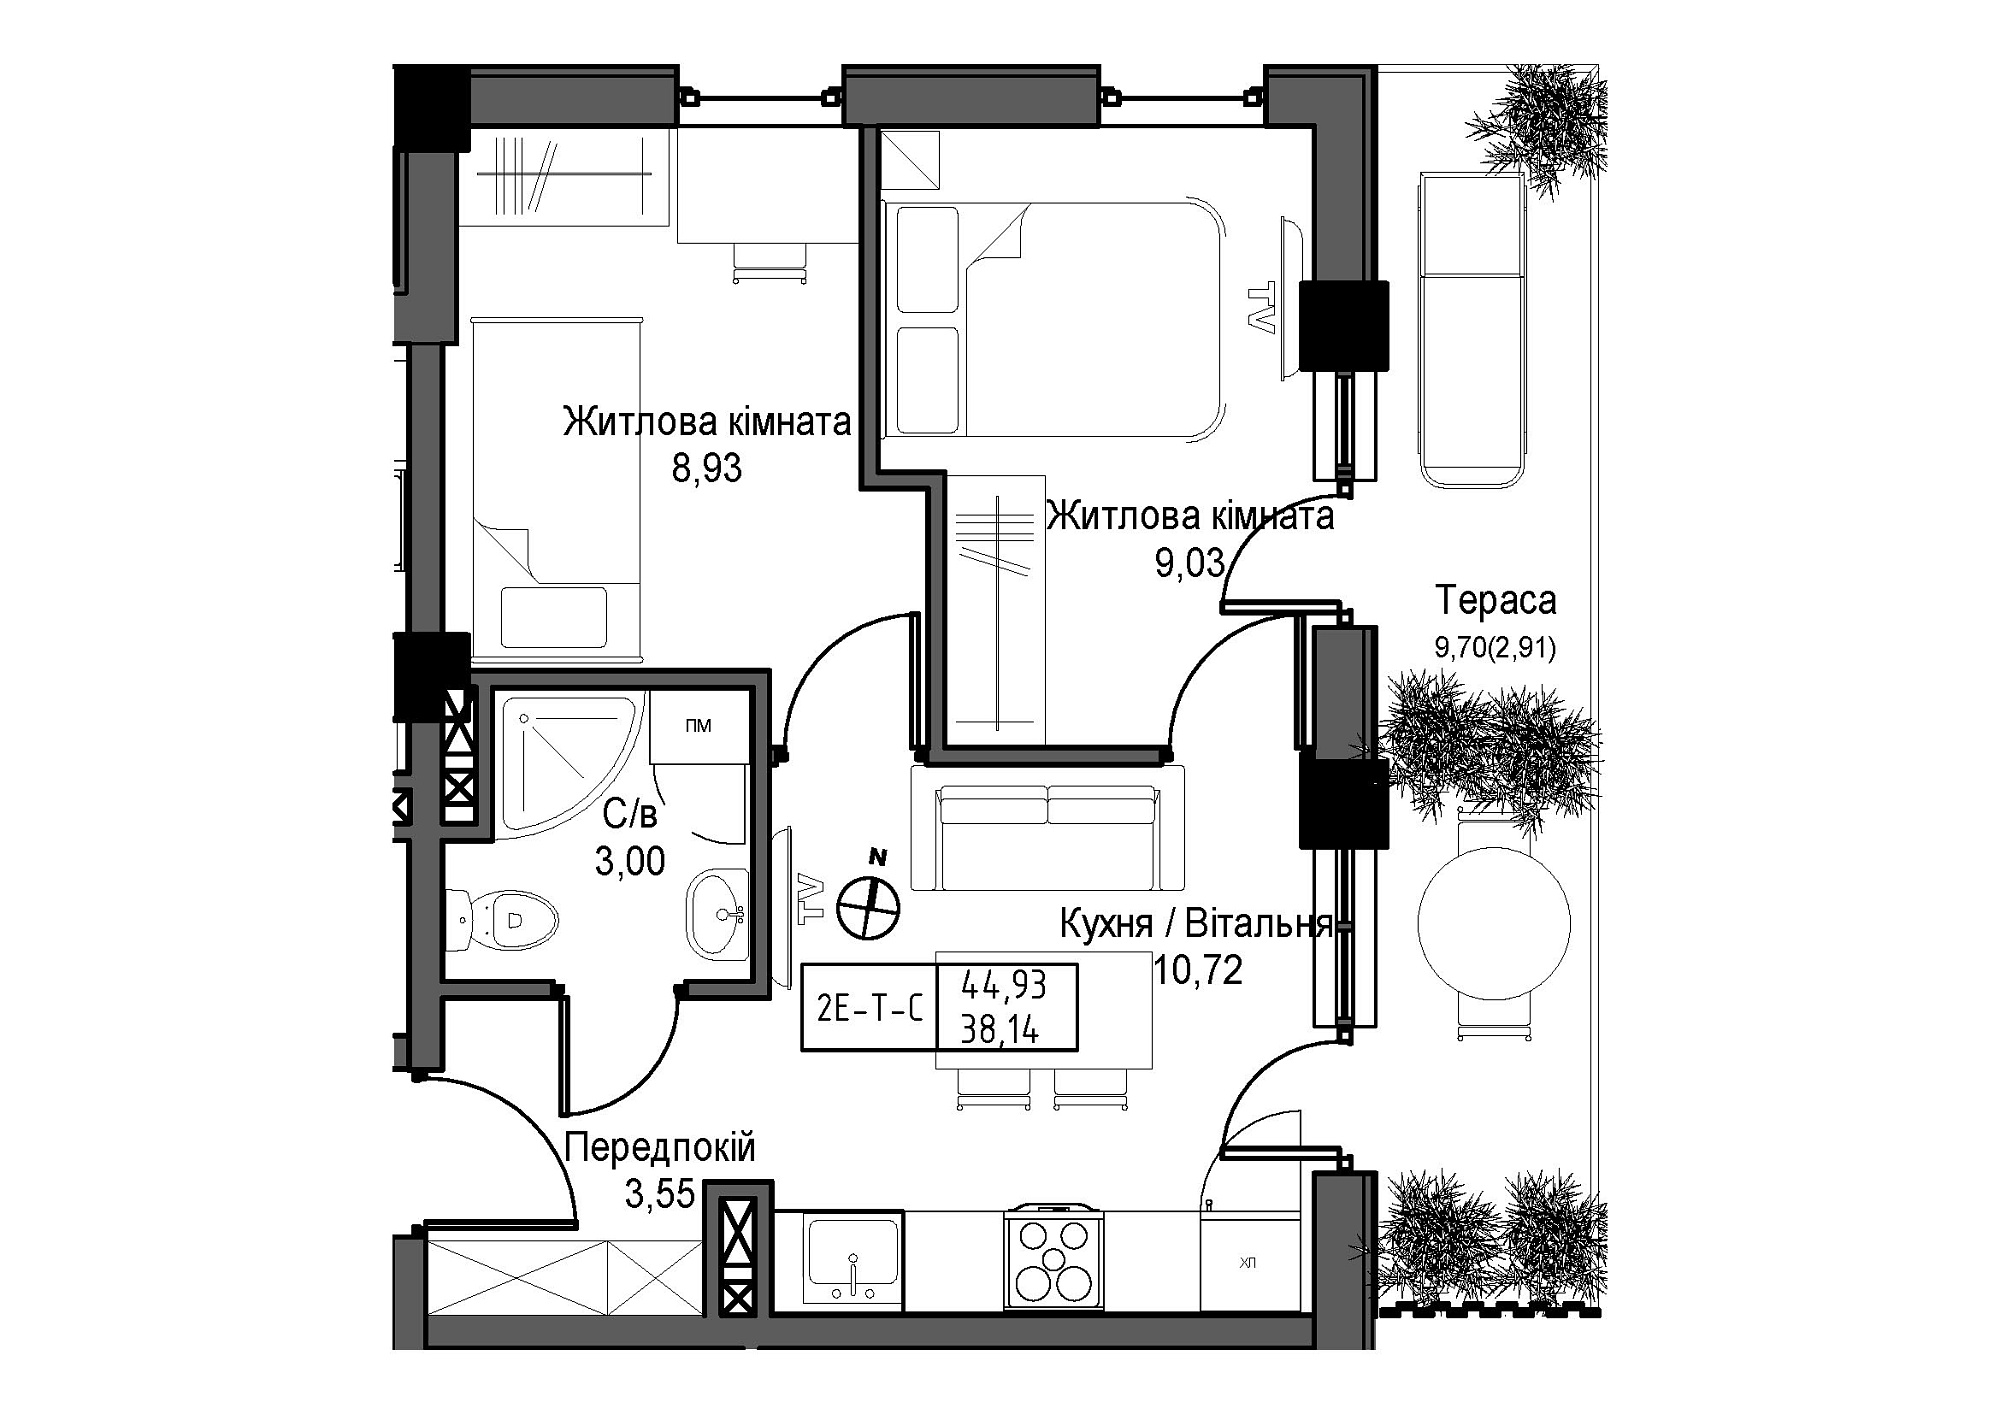 Planning 2-rm flats area 38.14m2, UM-007-04/0003.